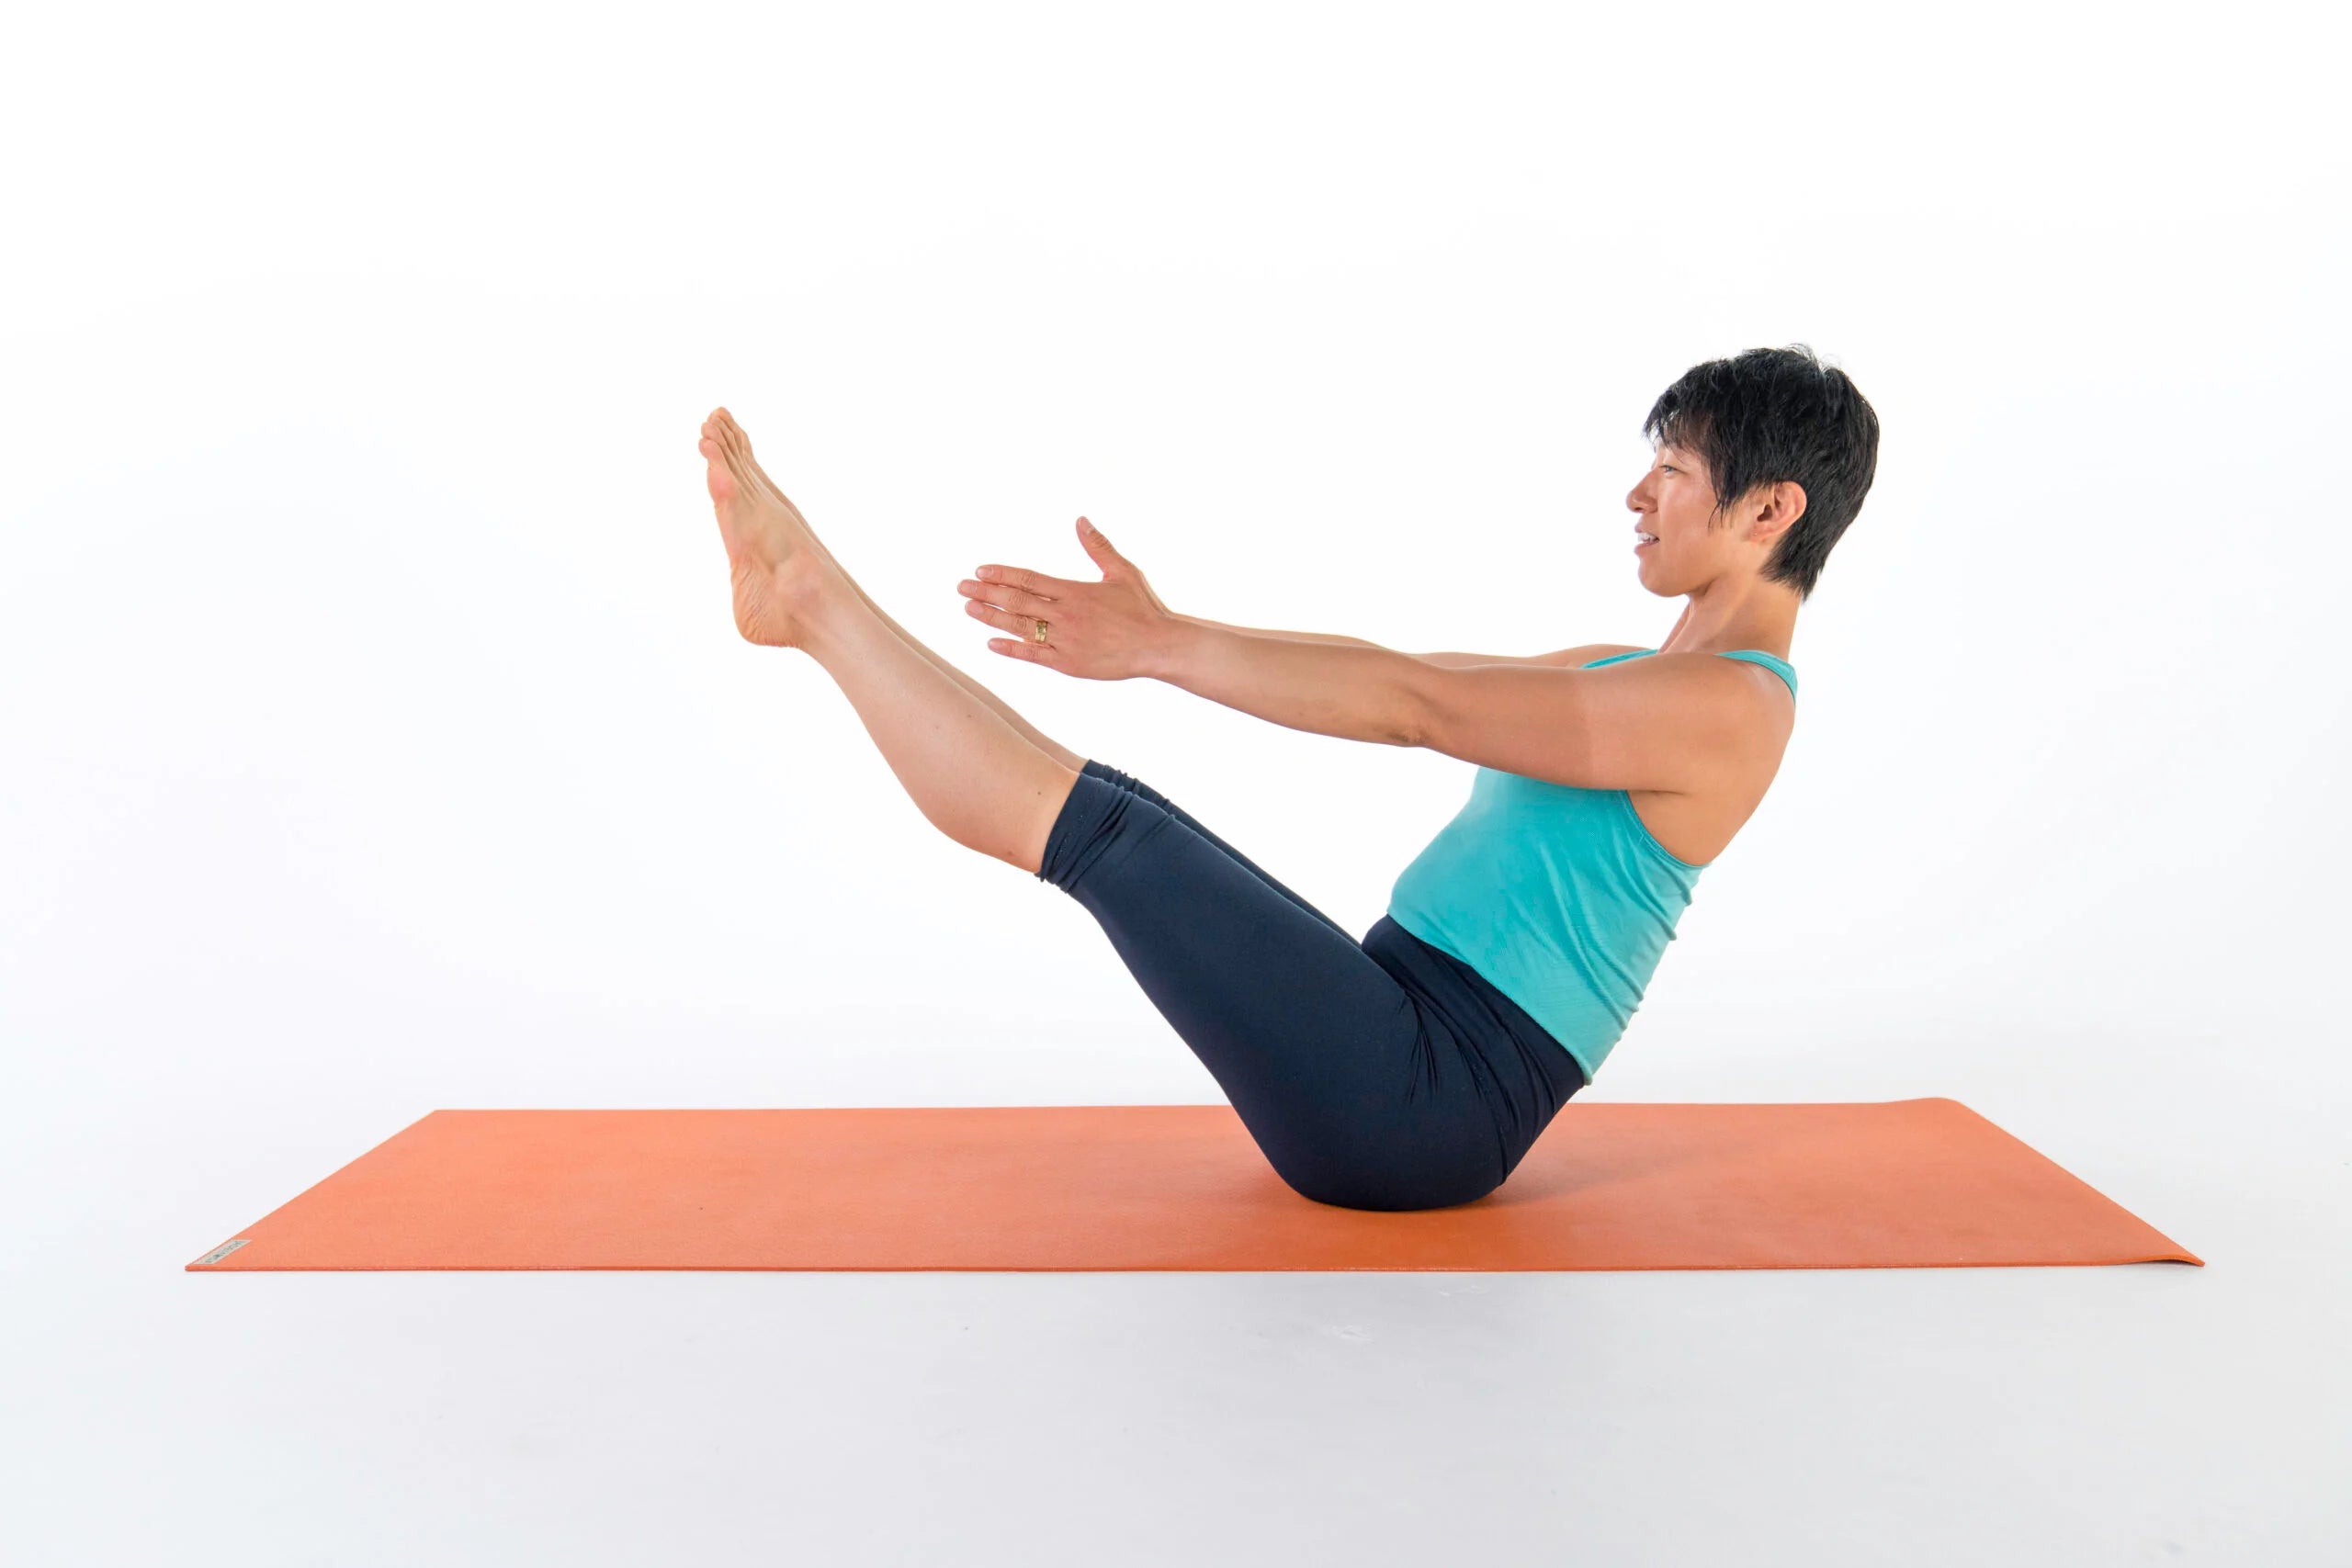 30 Minutes. 15 Yoga Poses. 1 Killer Core Workout - YOGA PRACTICE